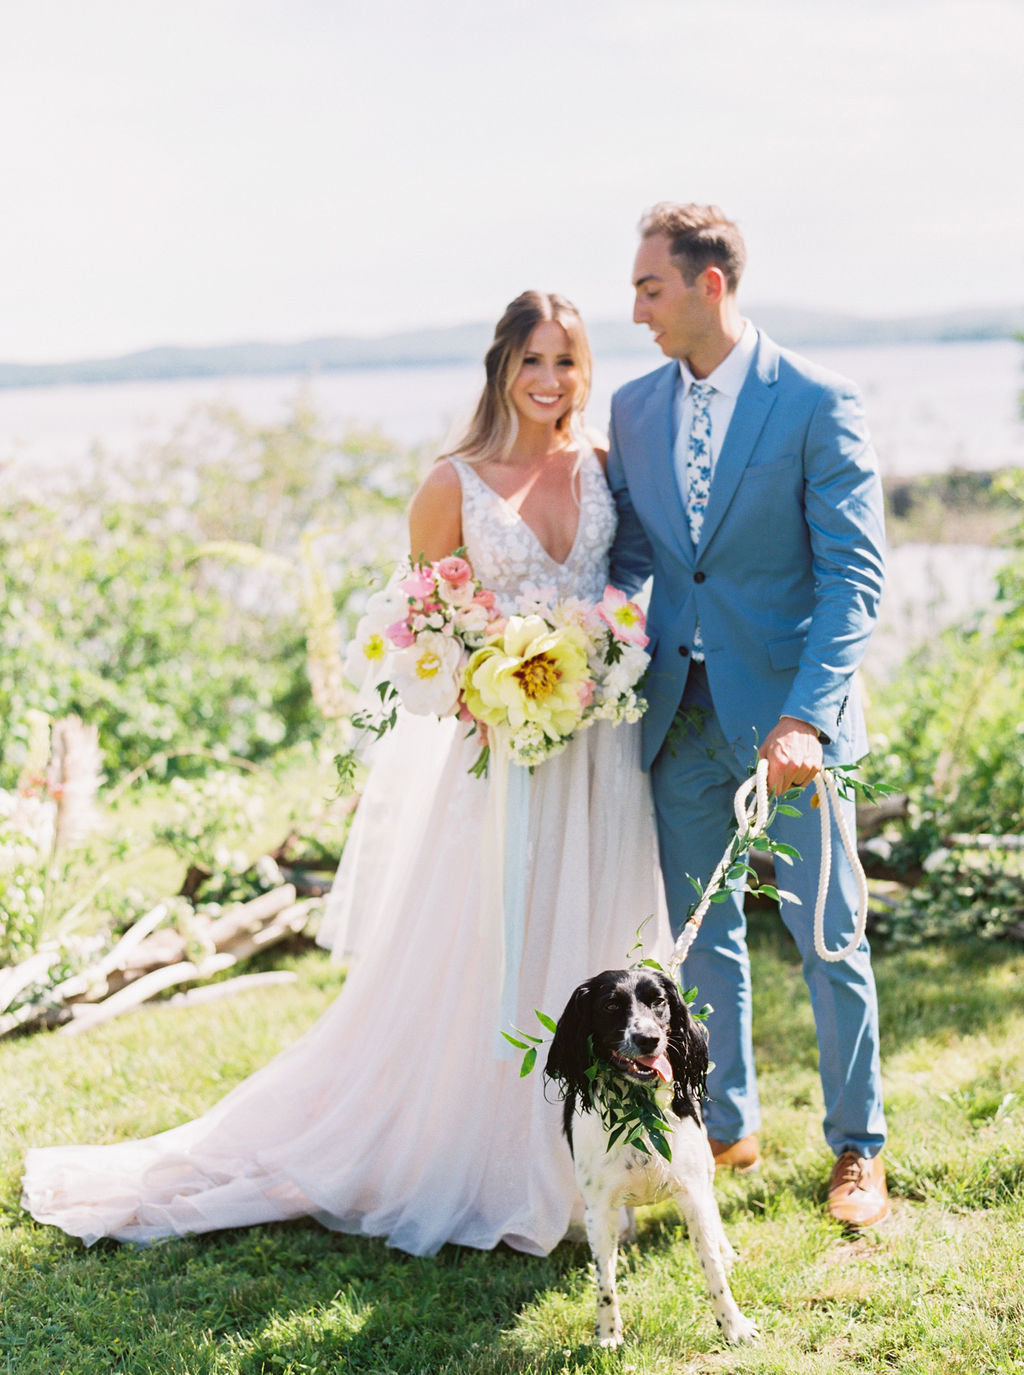 Amanda & Cole | Portsmouth, Maine | Mary Claire Photography | Arizona & Destination Fine Art Wedding Photographer